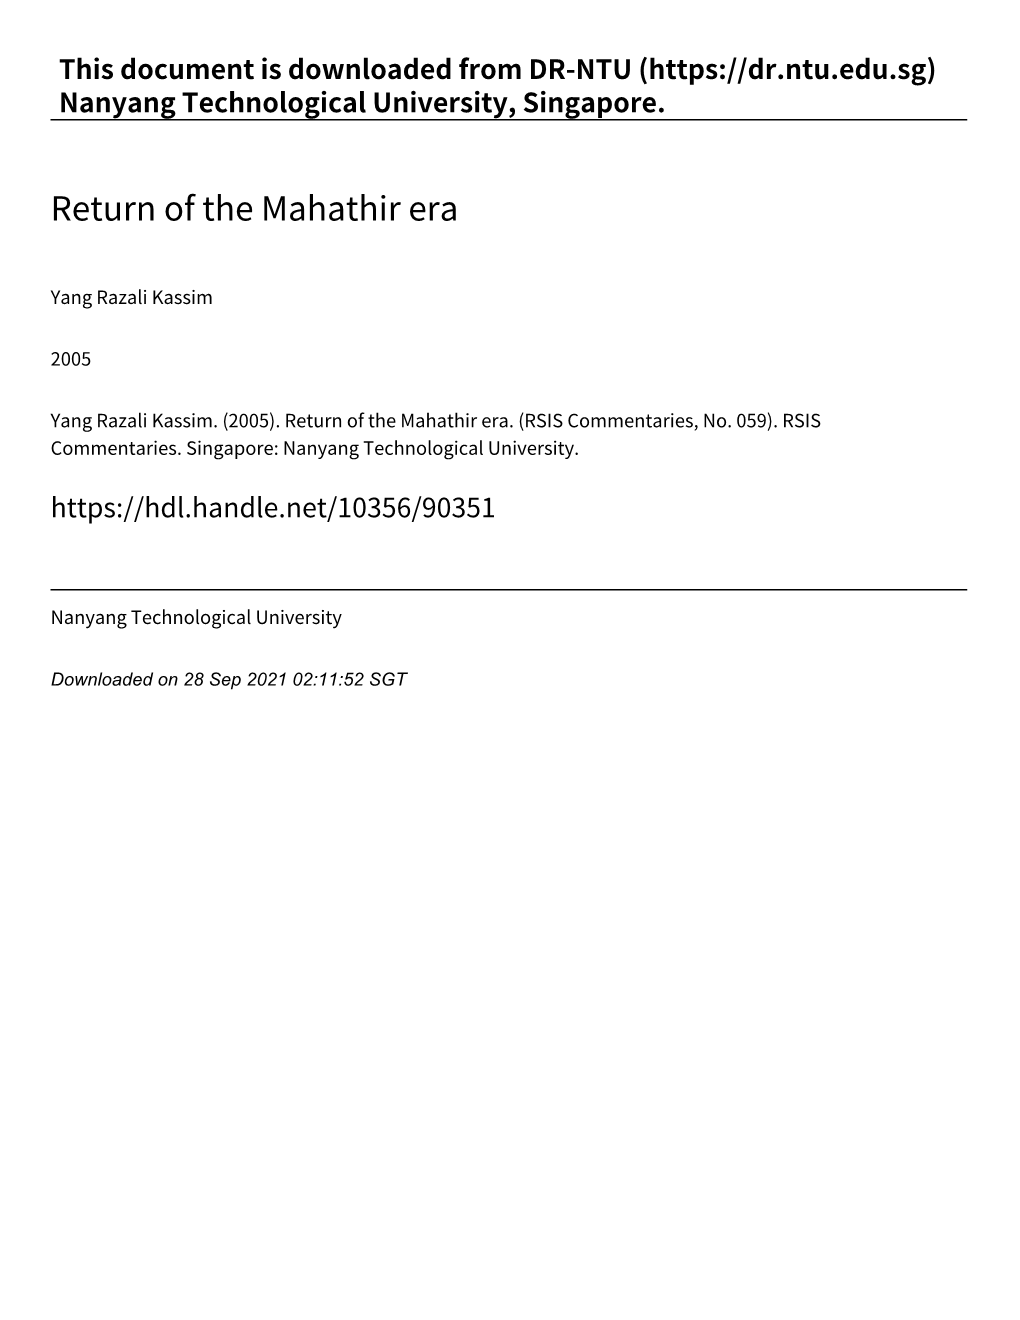 Return of the Mahathir Era